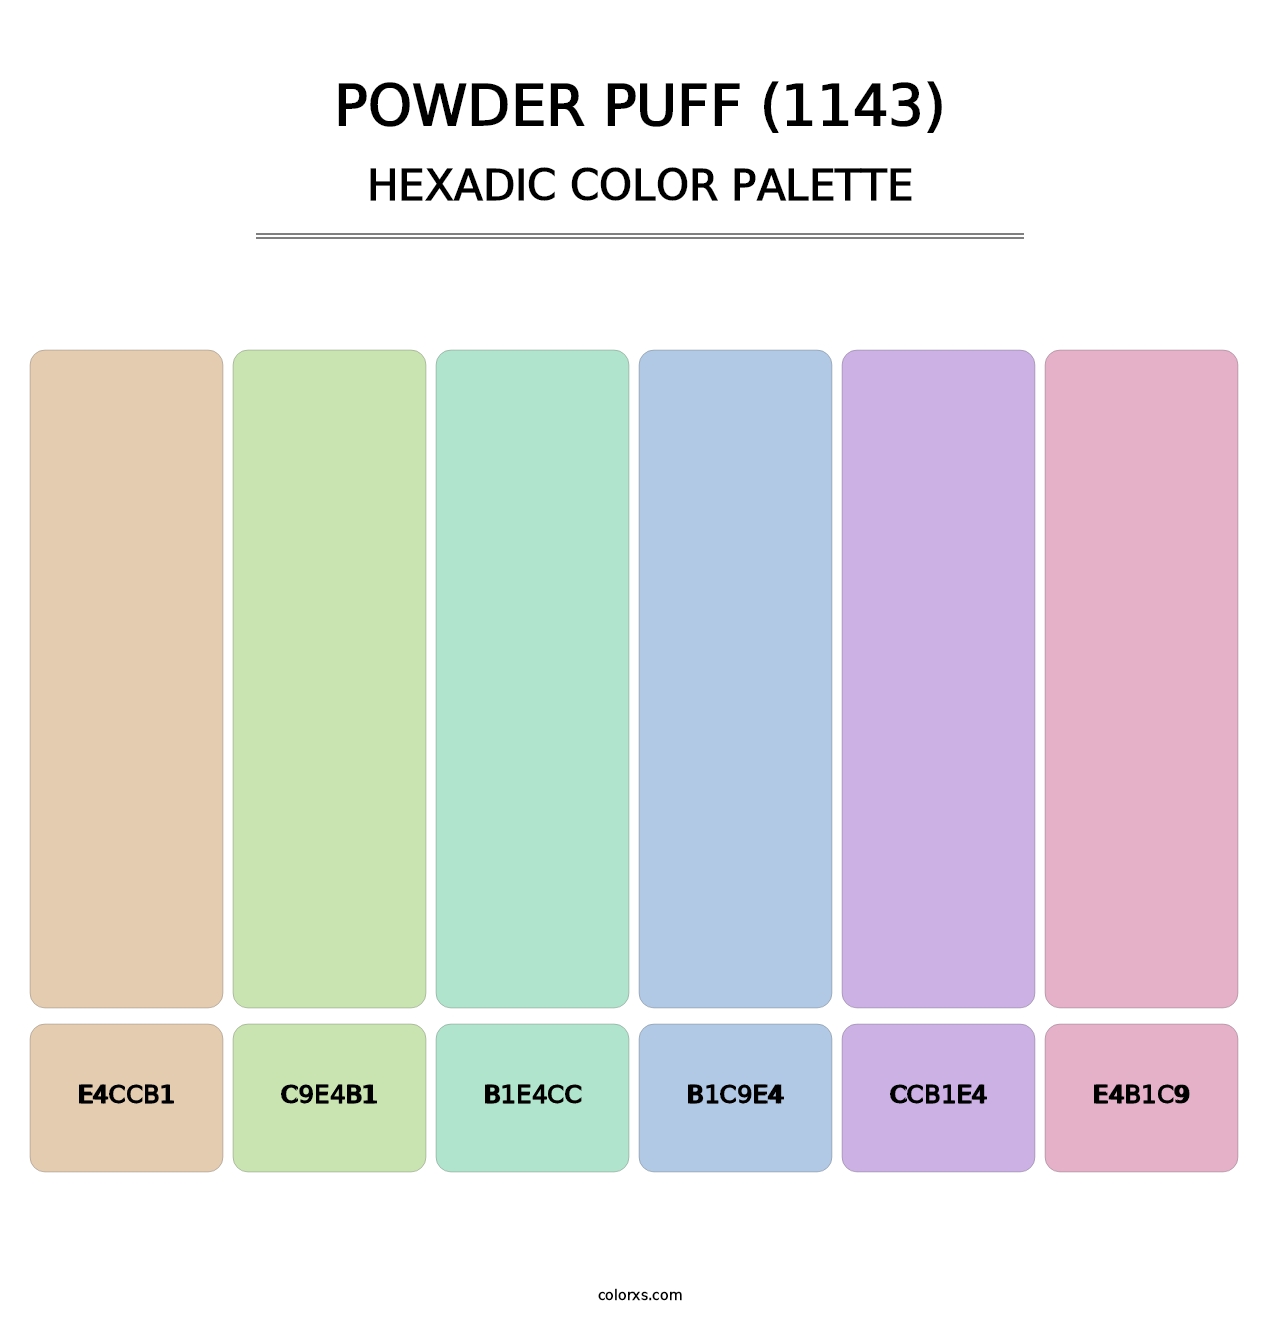 Powder Puff (1143) - Hexadic Color Palette